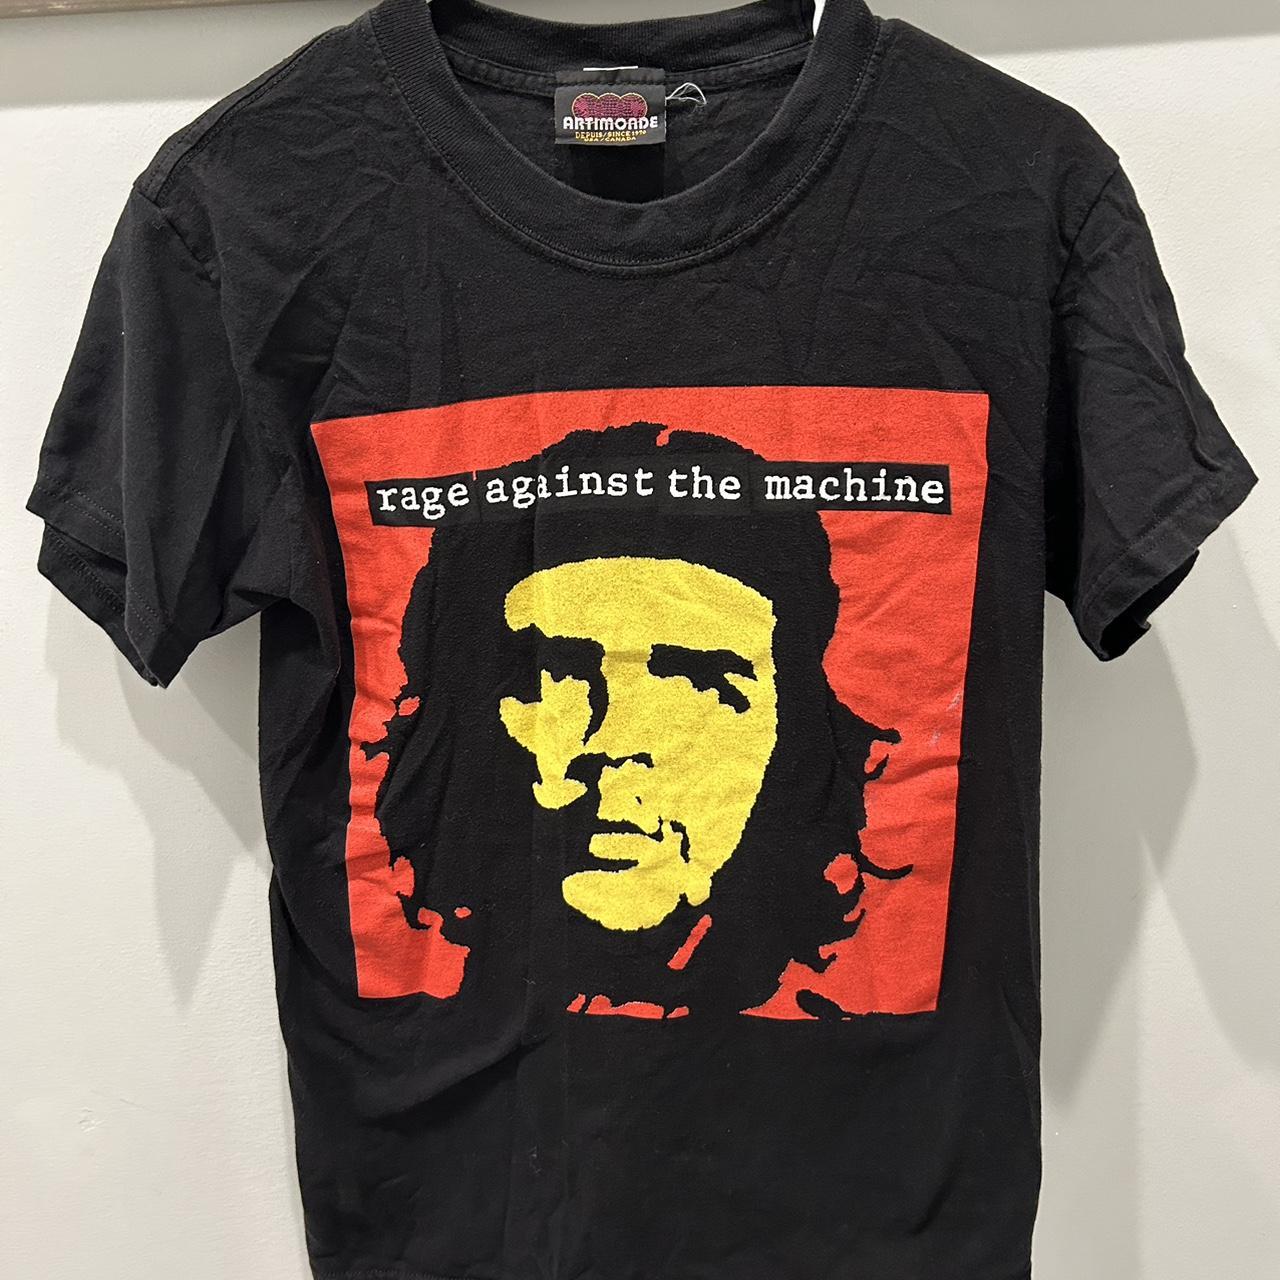 Vintage Che Guevara shirt red size XL 90’s ratm anarchy Cuba